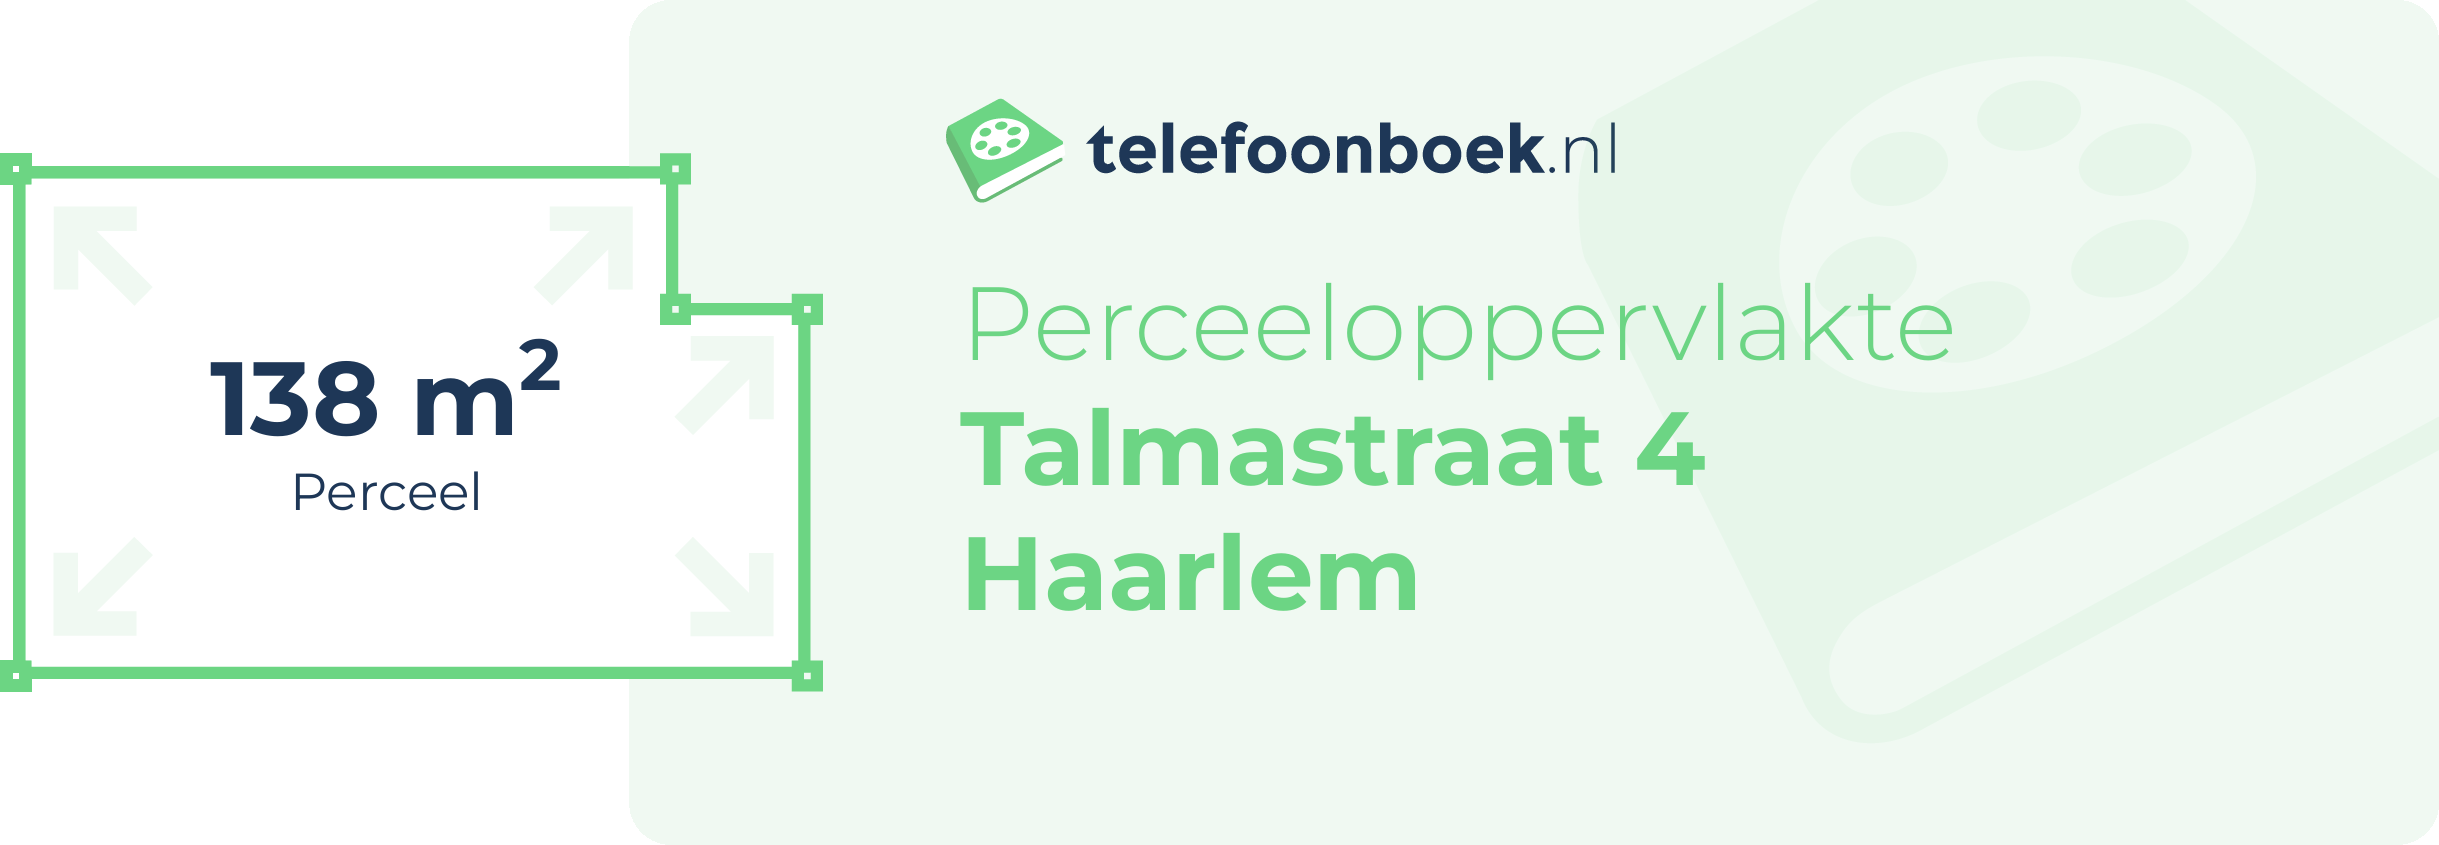 Perceeloppervlakte Talmastraat 4 Haarlem